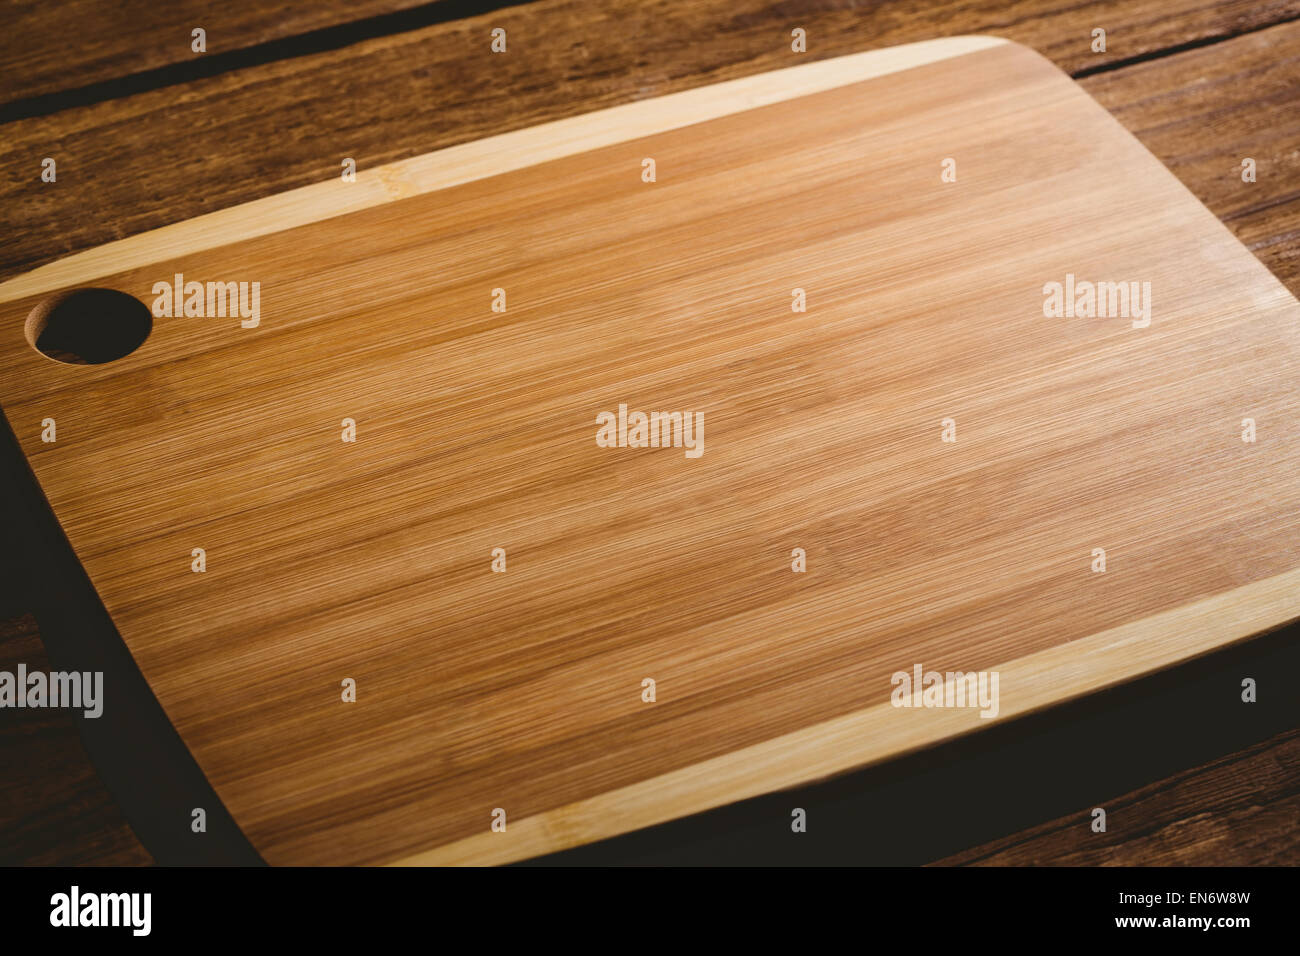 Wooden chopping board Stock Photo